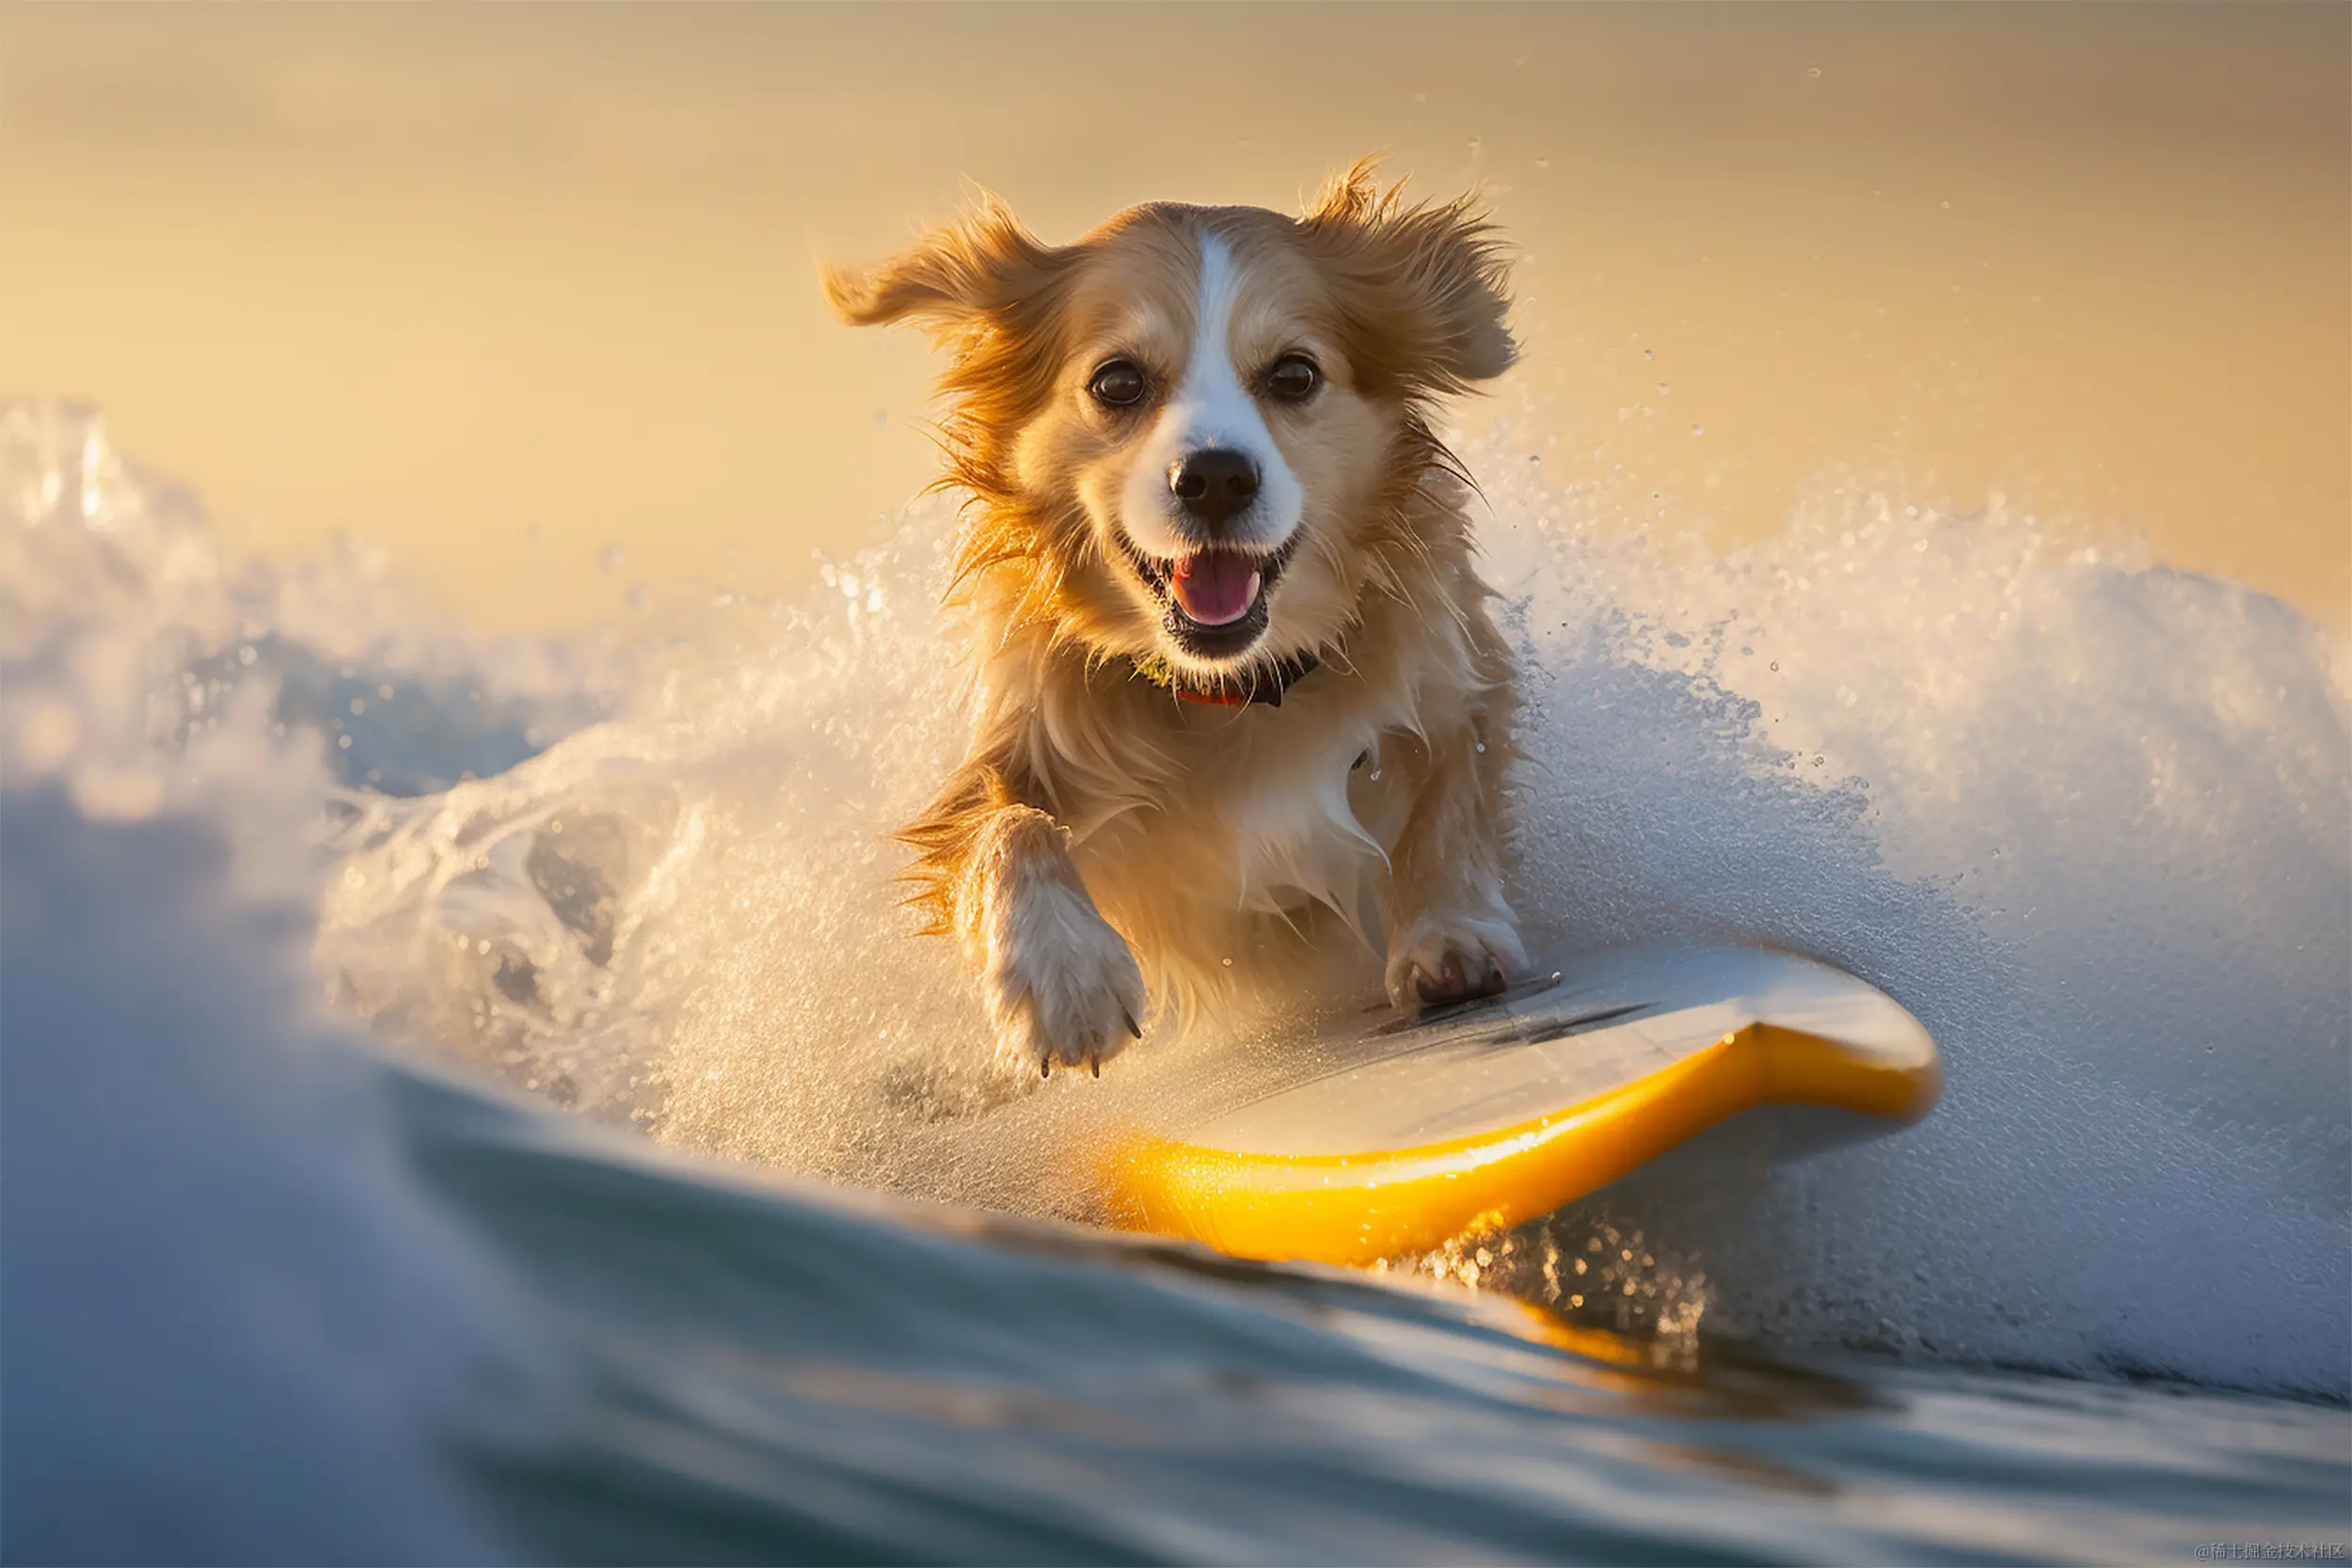 gratisography-surfing-dog-free-stock-photo.jpg